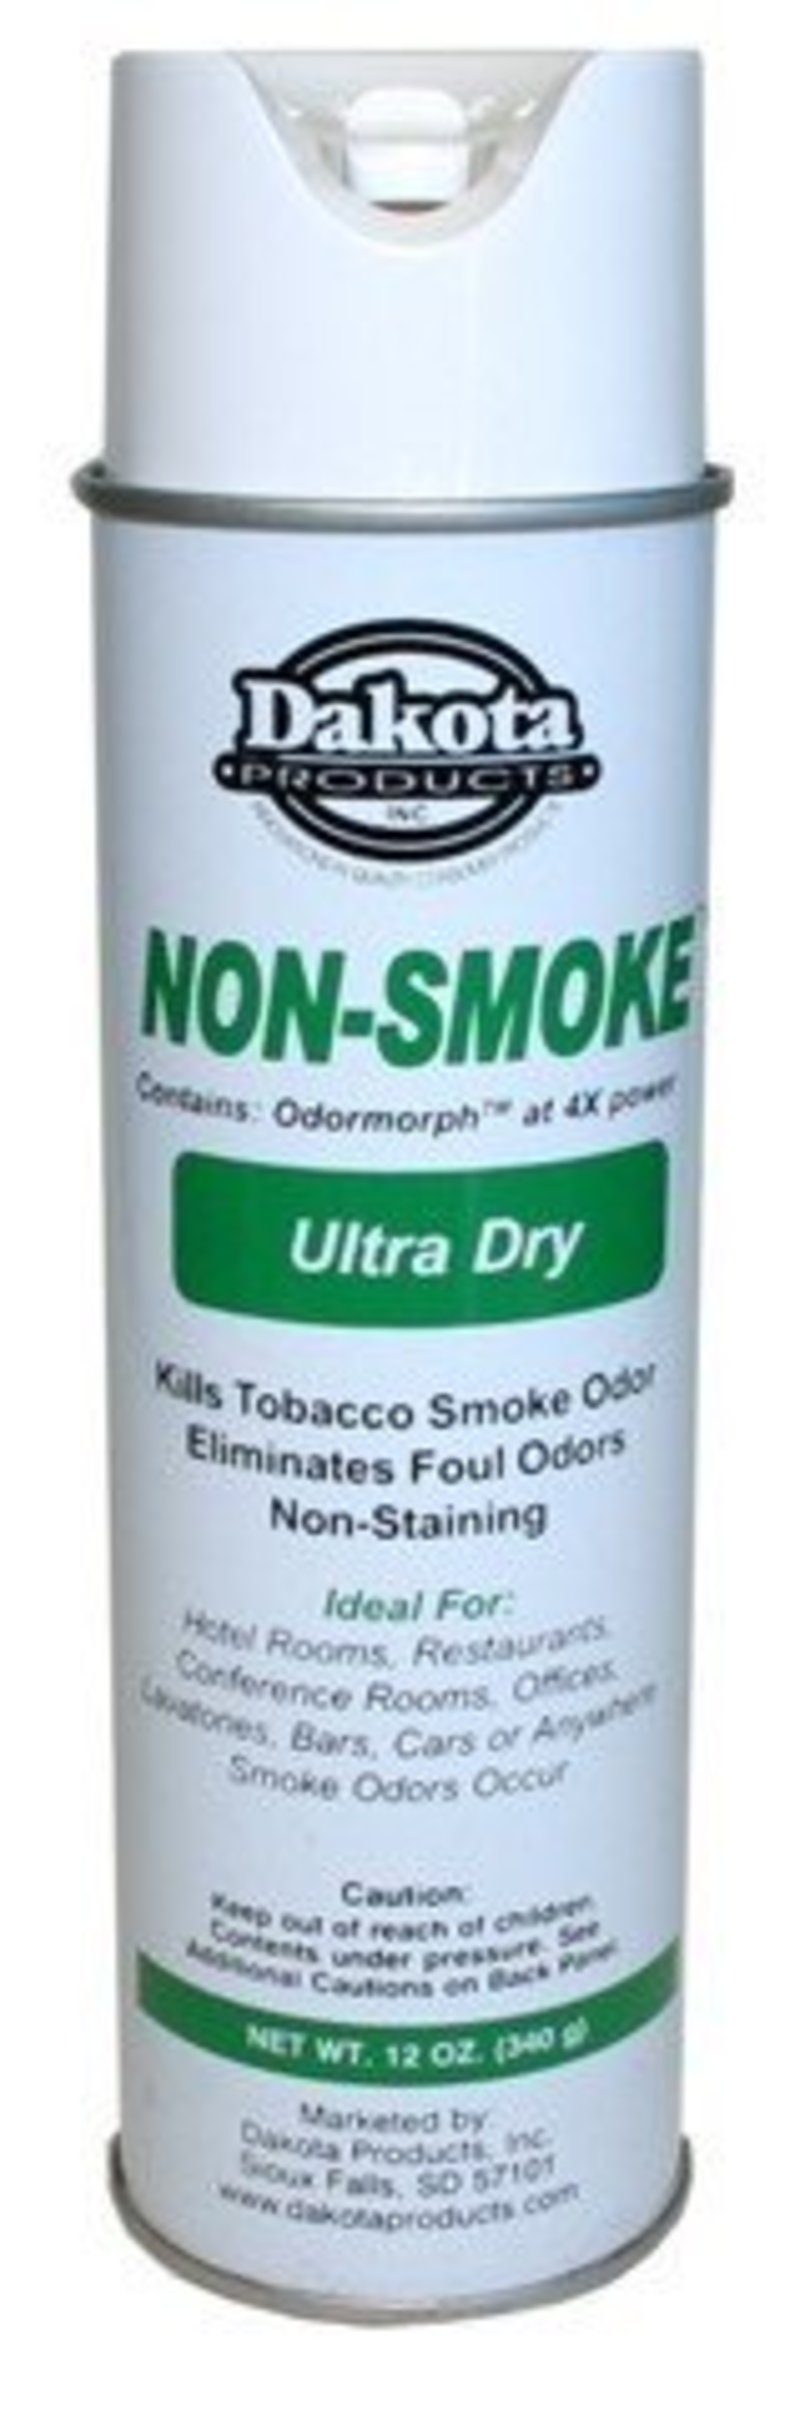 Dakota Non-Smoke Cigarette Smoke Odour Eliminator 12oz